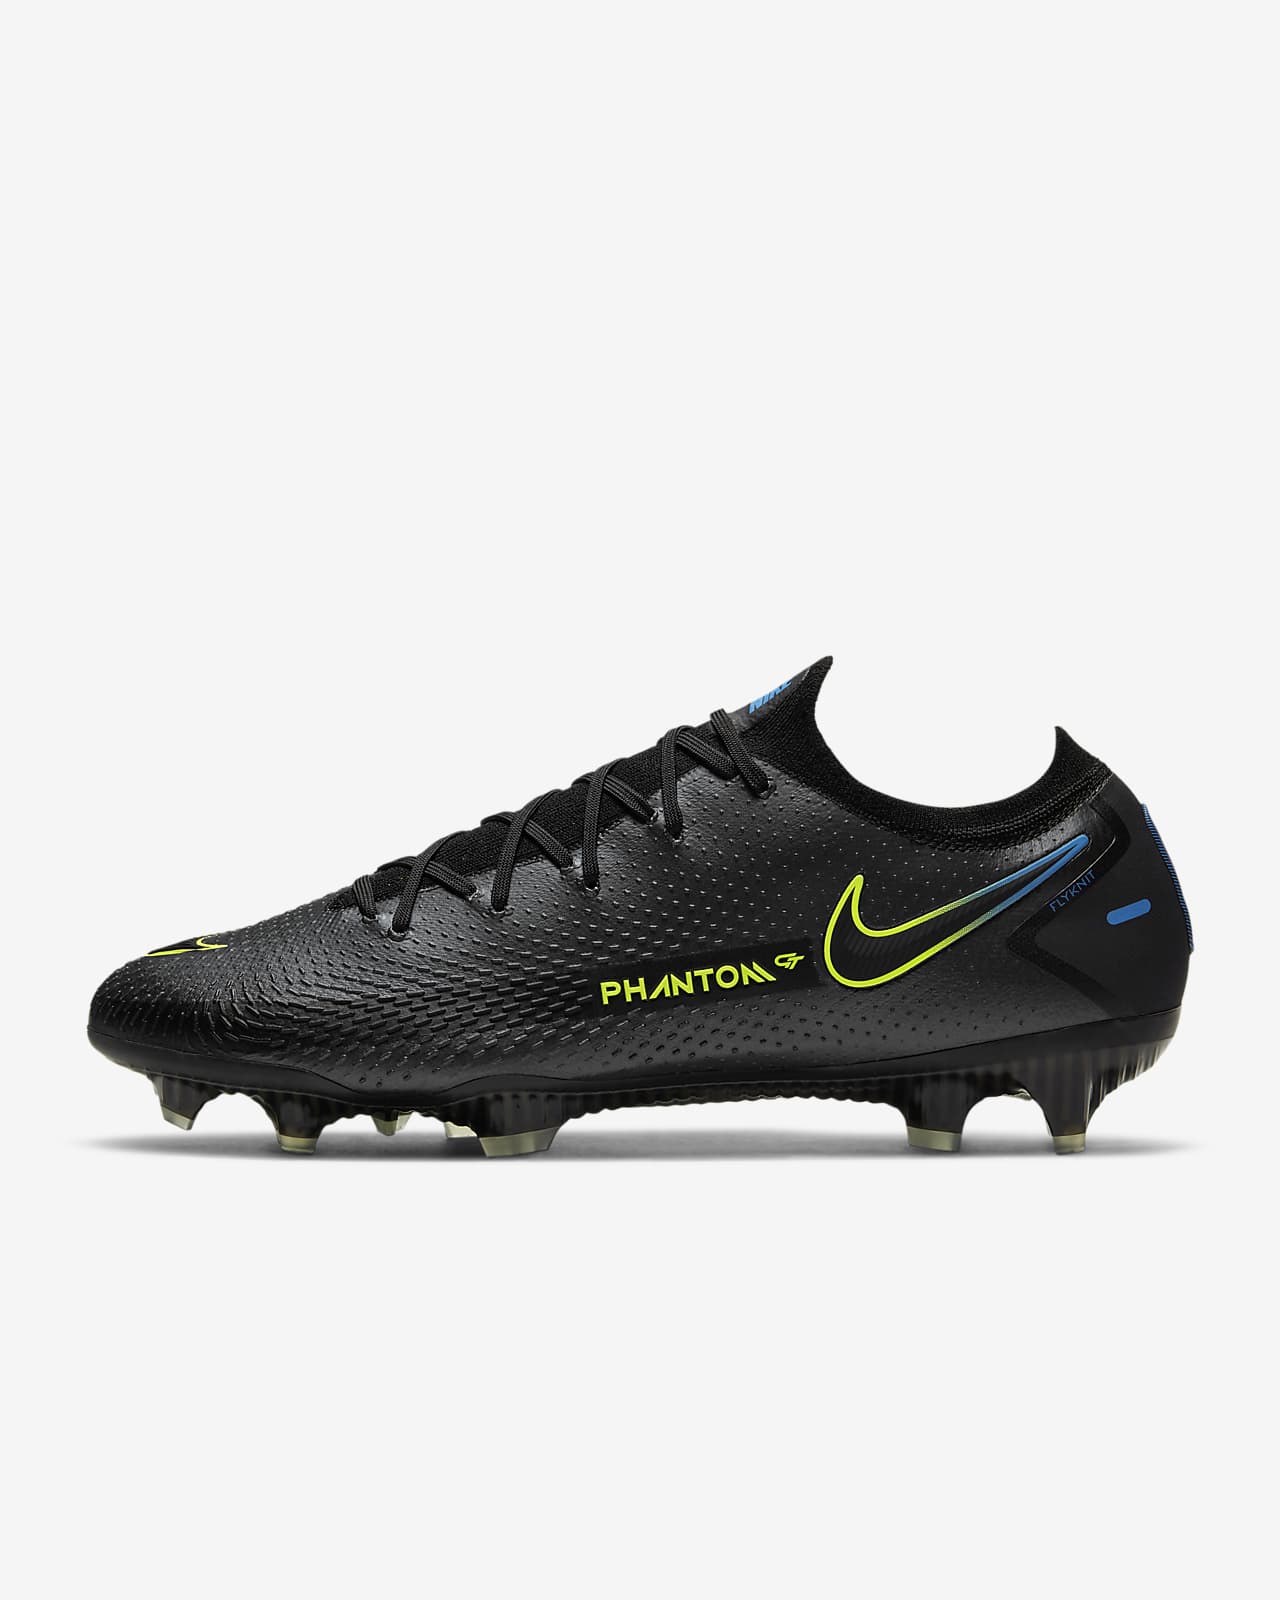 nike vapormax soccer boots